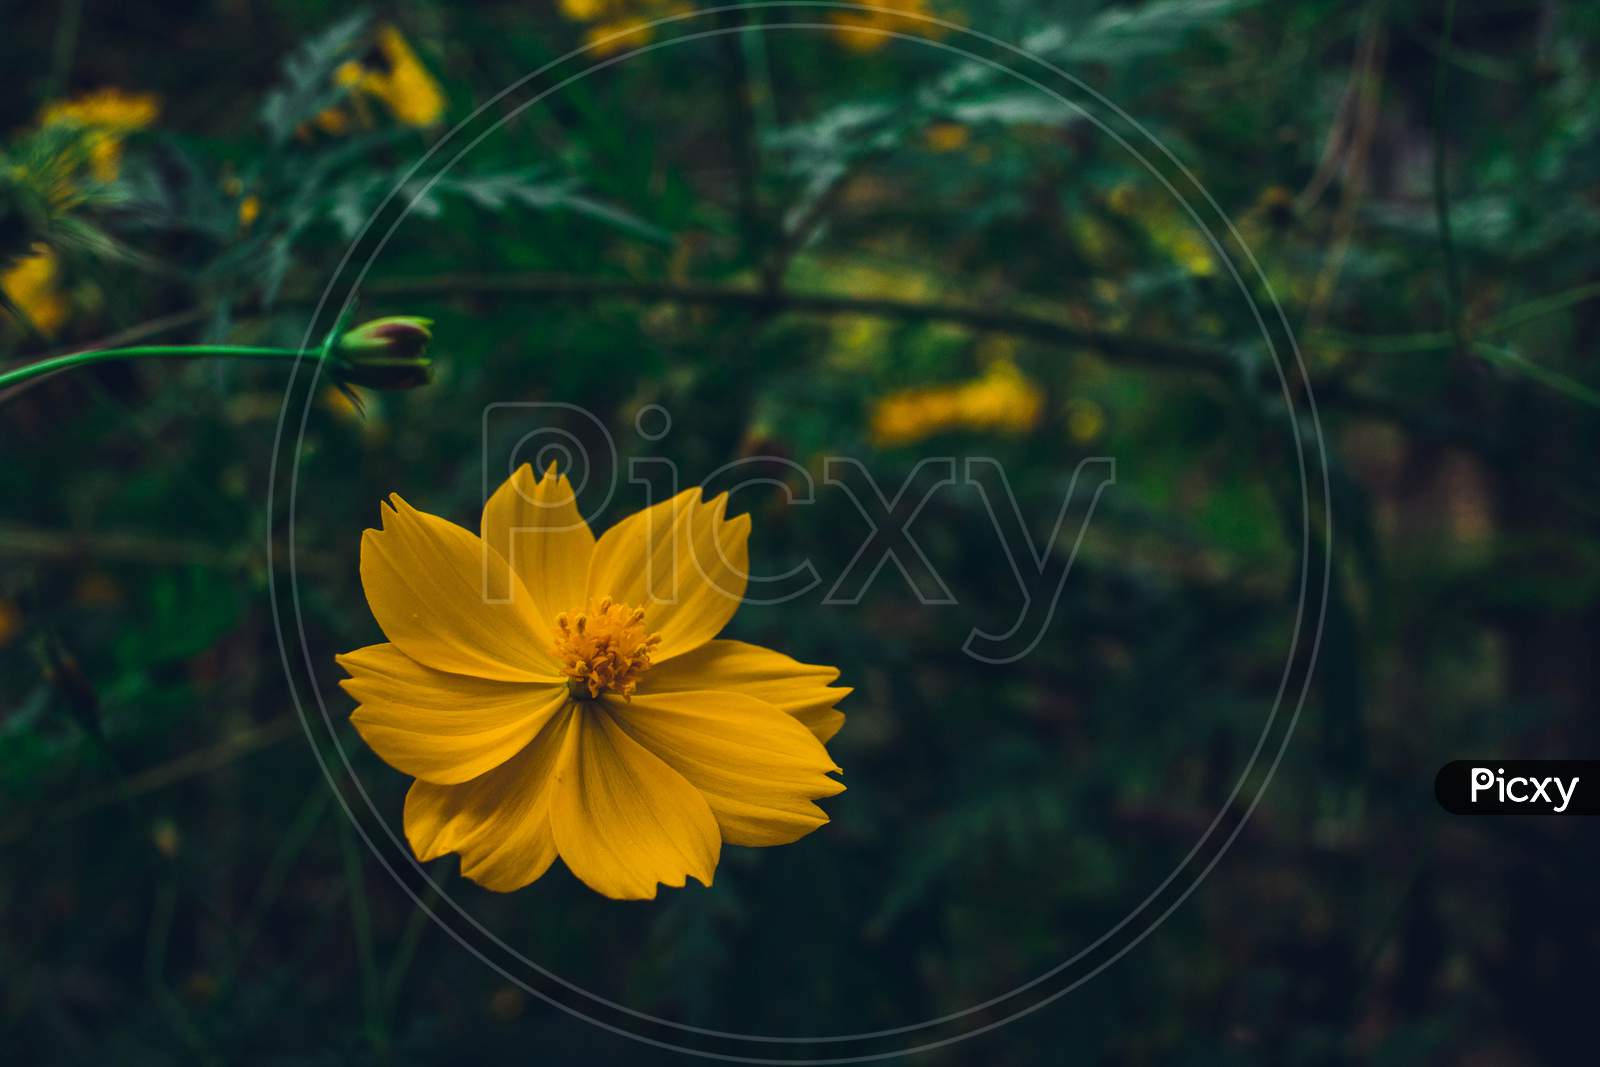 Moody yellow flower in garden